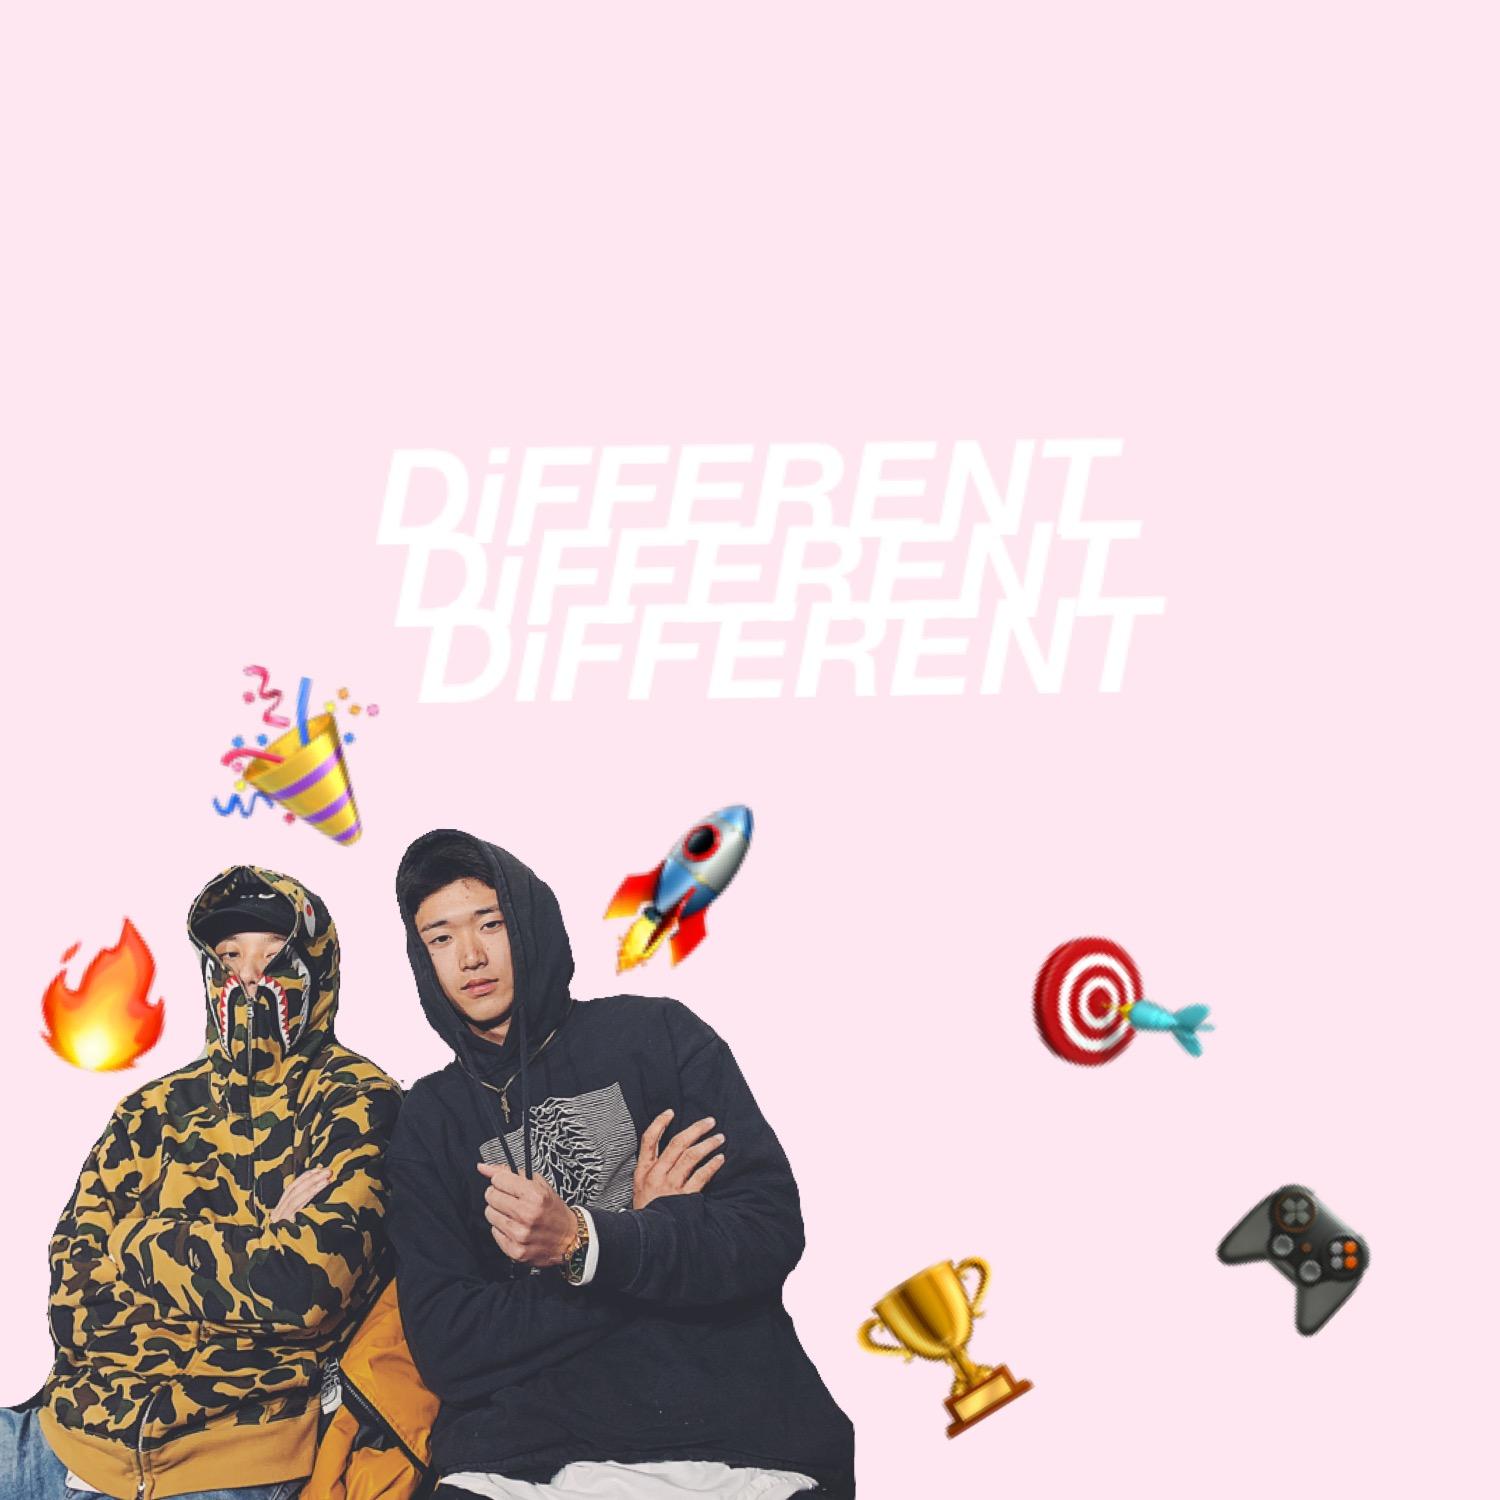 Different